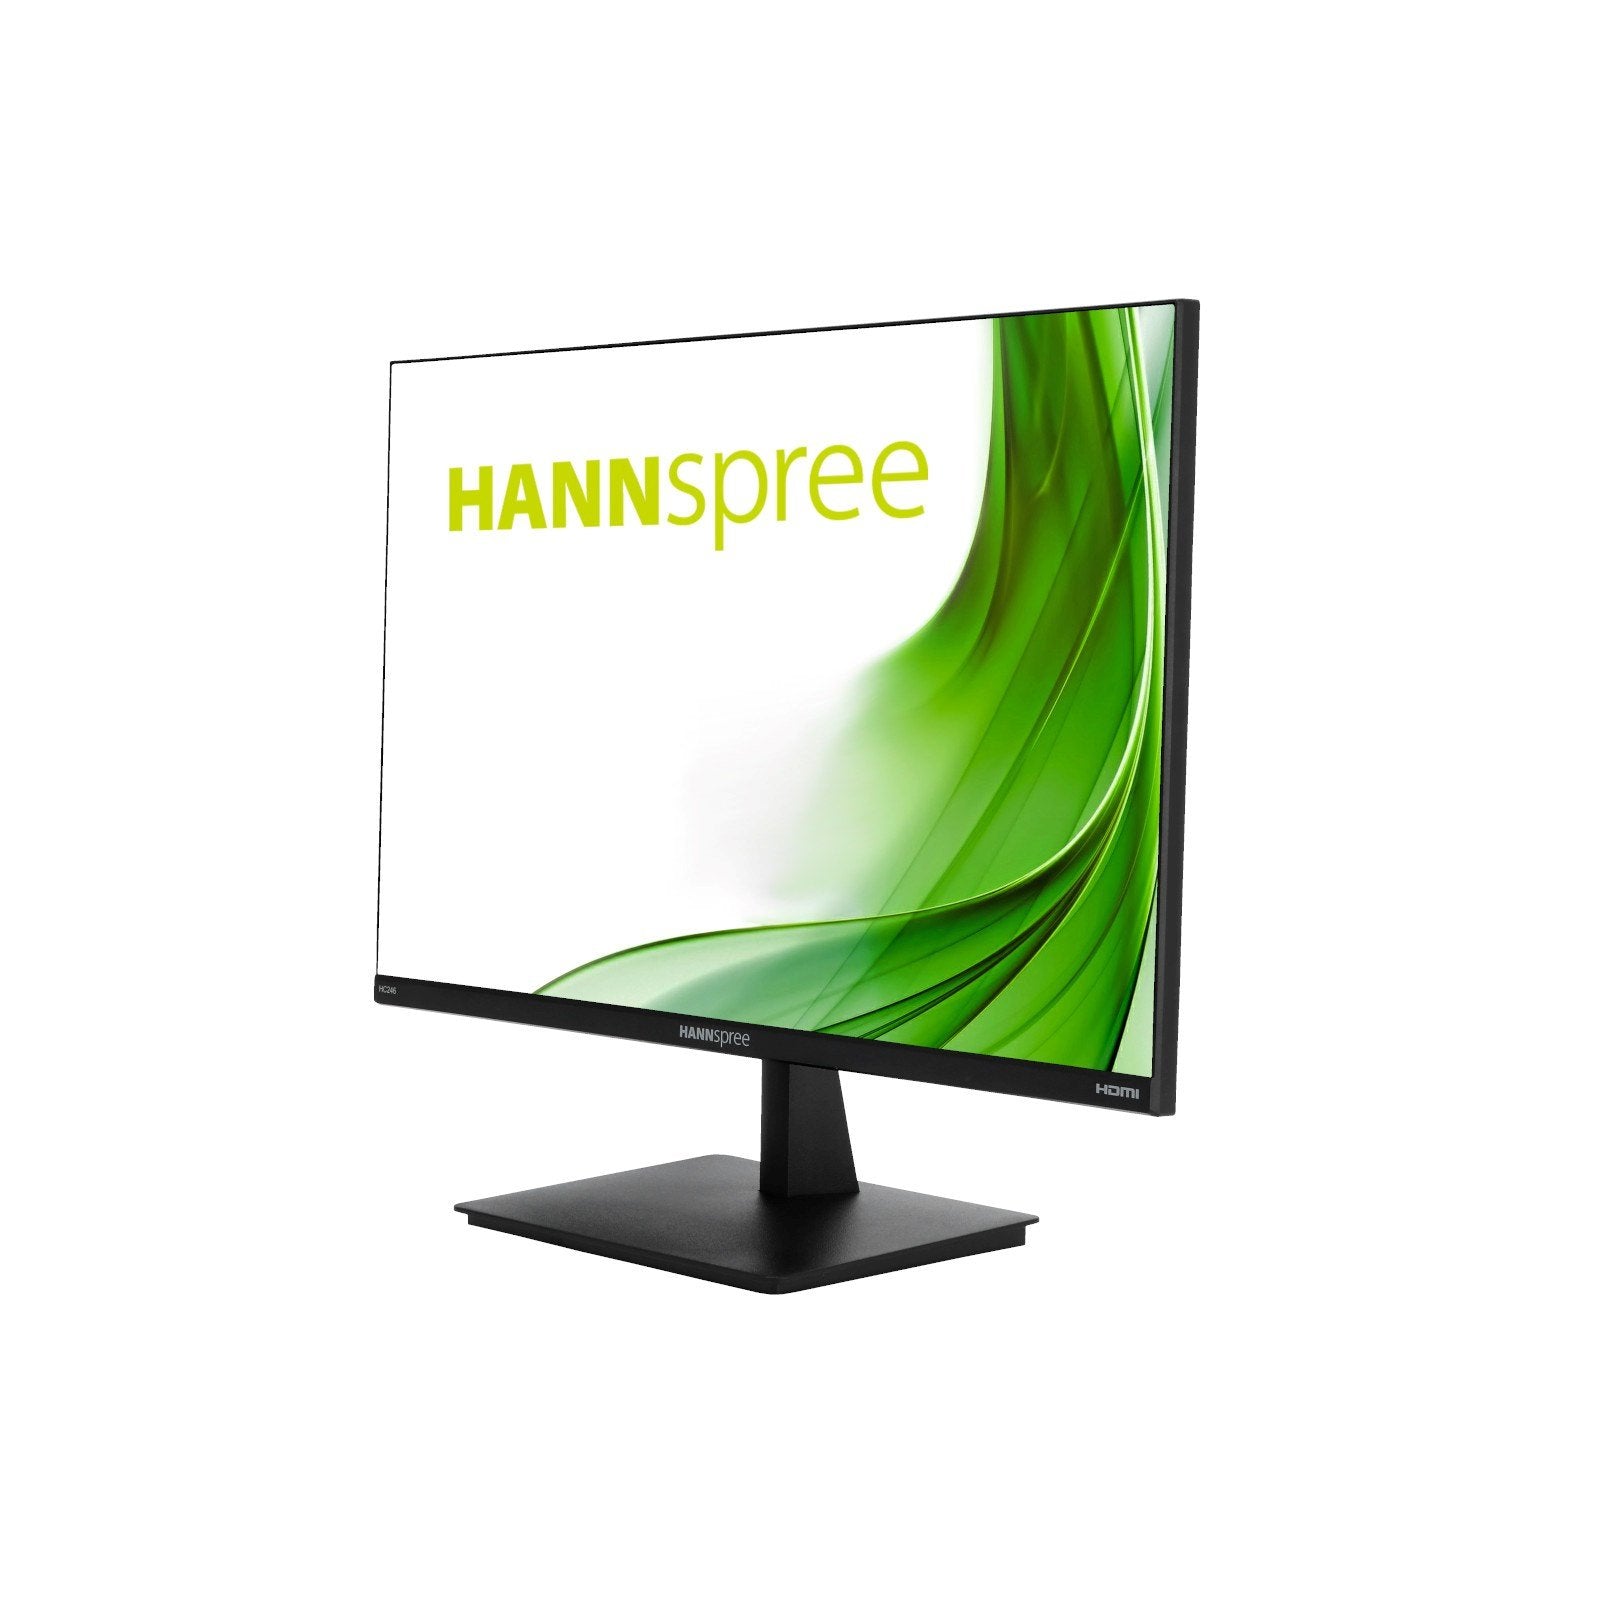 Hannspree HC246HPB 24" Full HD Monitor